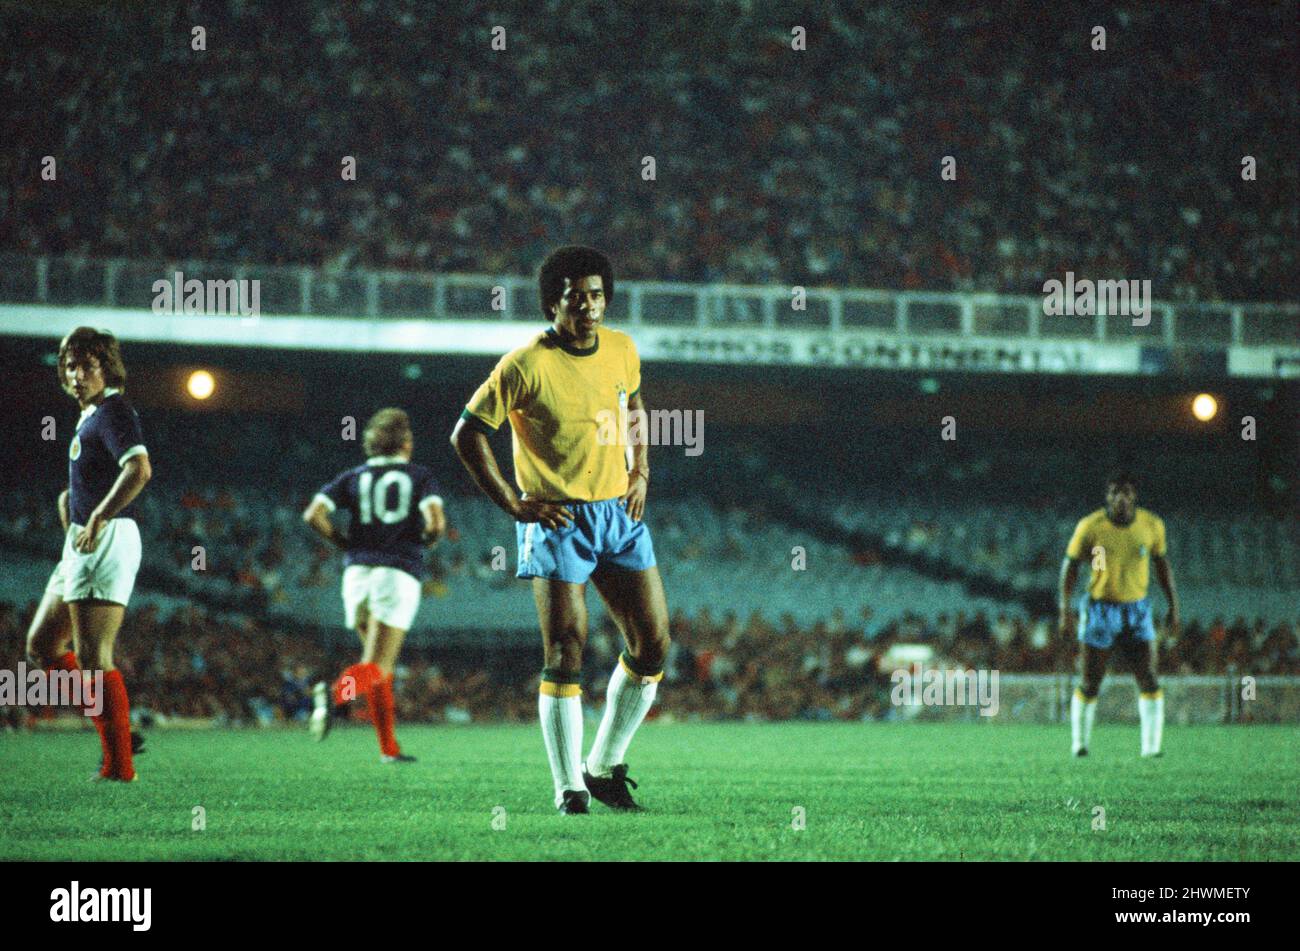 Brazil 1-0 Scotland, 1972 Brazil Independence Cup, final stage, Group A match at the Estadio do Maracana, Rio de Janeiro, Brazil, Wednesday 5th July 1972. Pictured, Jairzinho of Brazil. Stock Photo